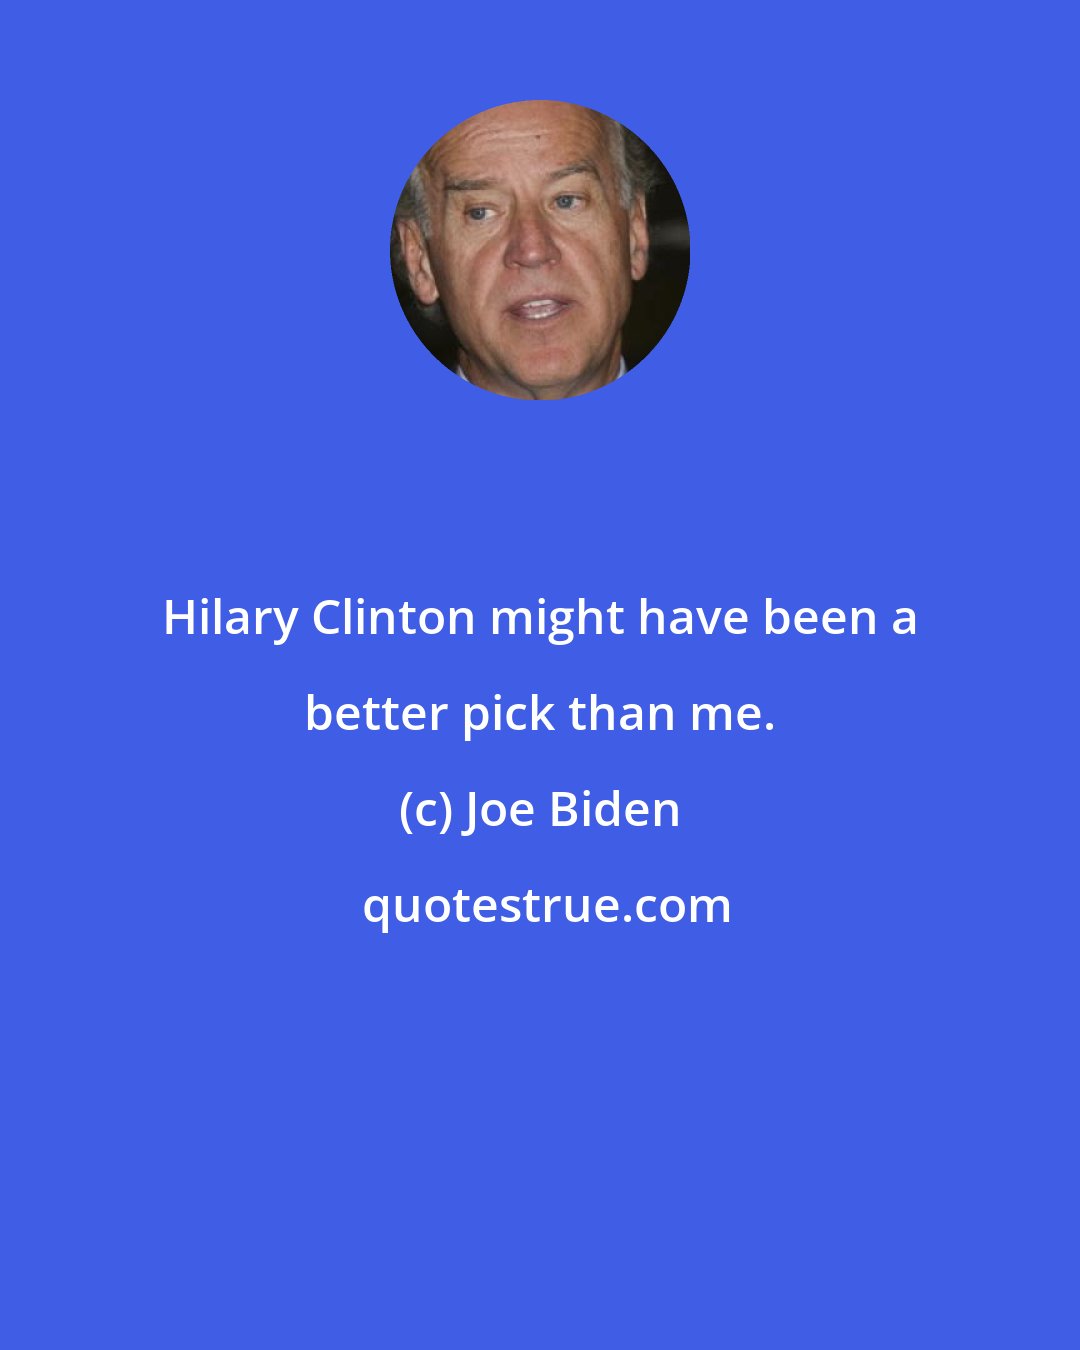 Joe Biden: Hilary Clinton might have been a better pick than me.